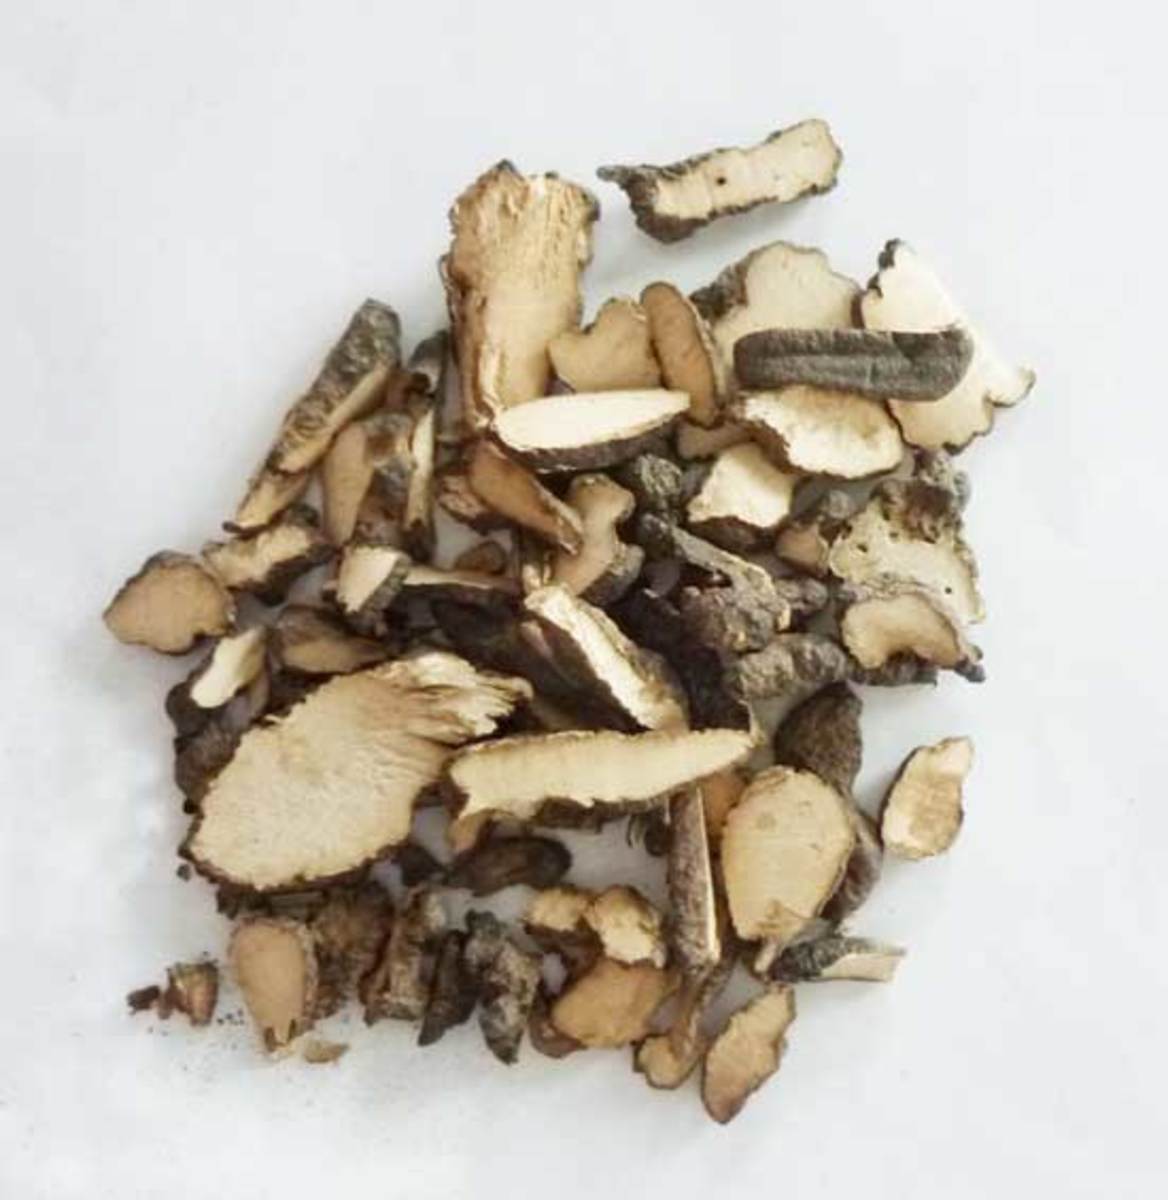 Dried Polyporus, zhu ling